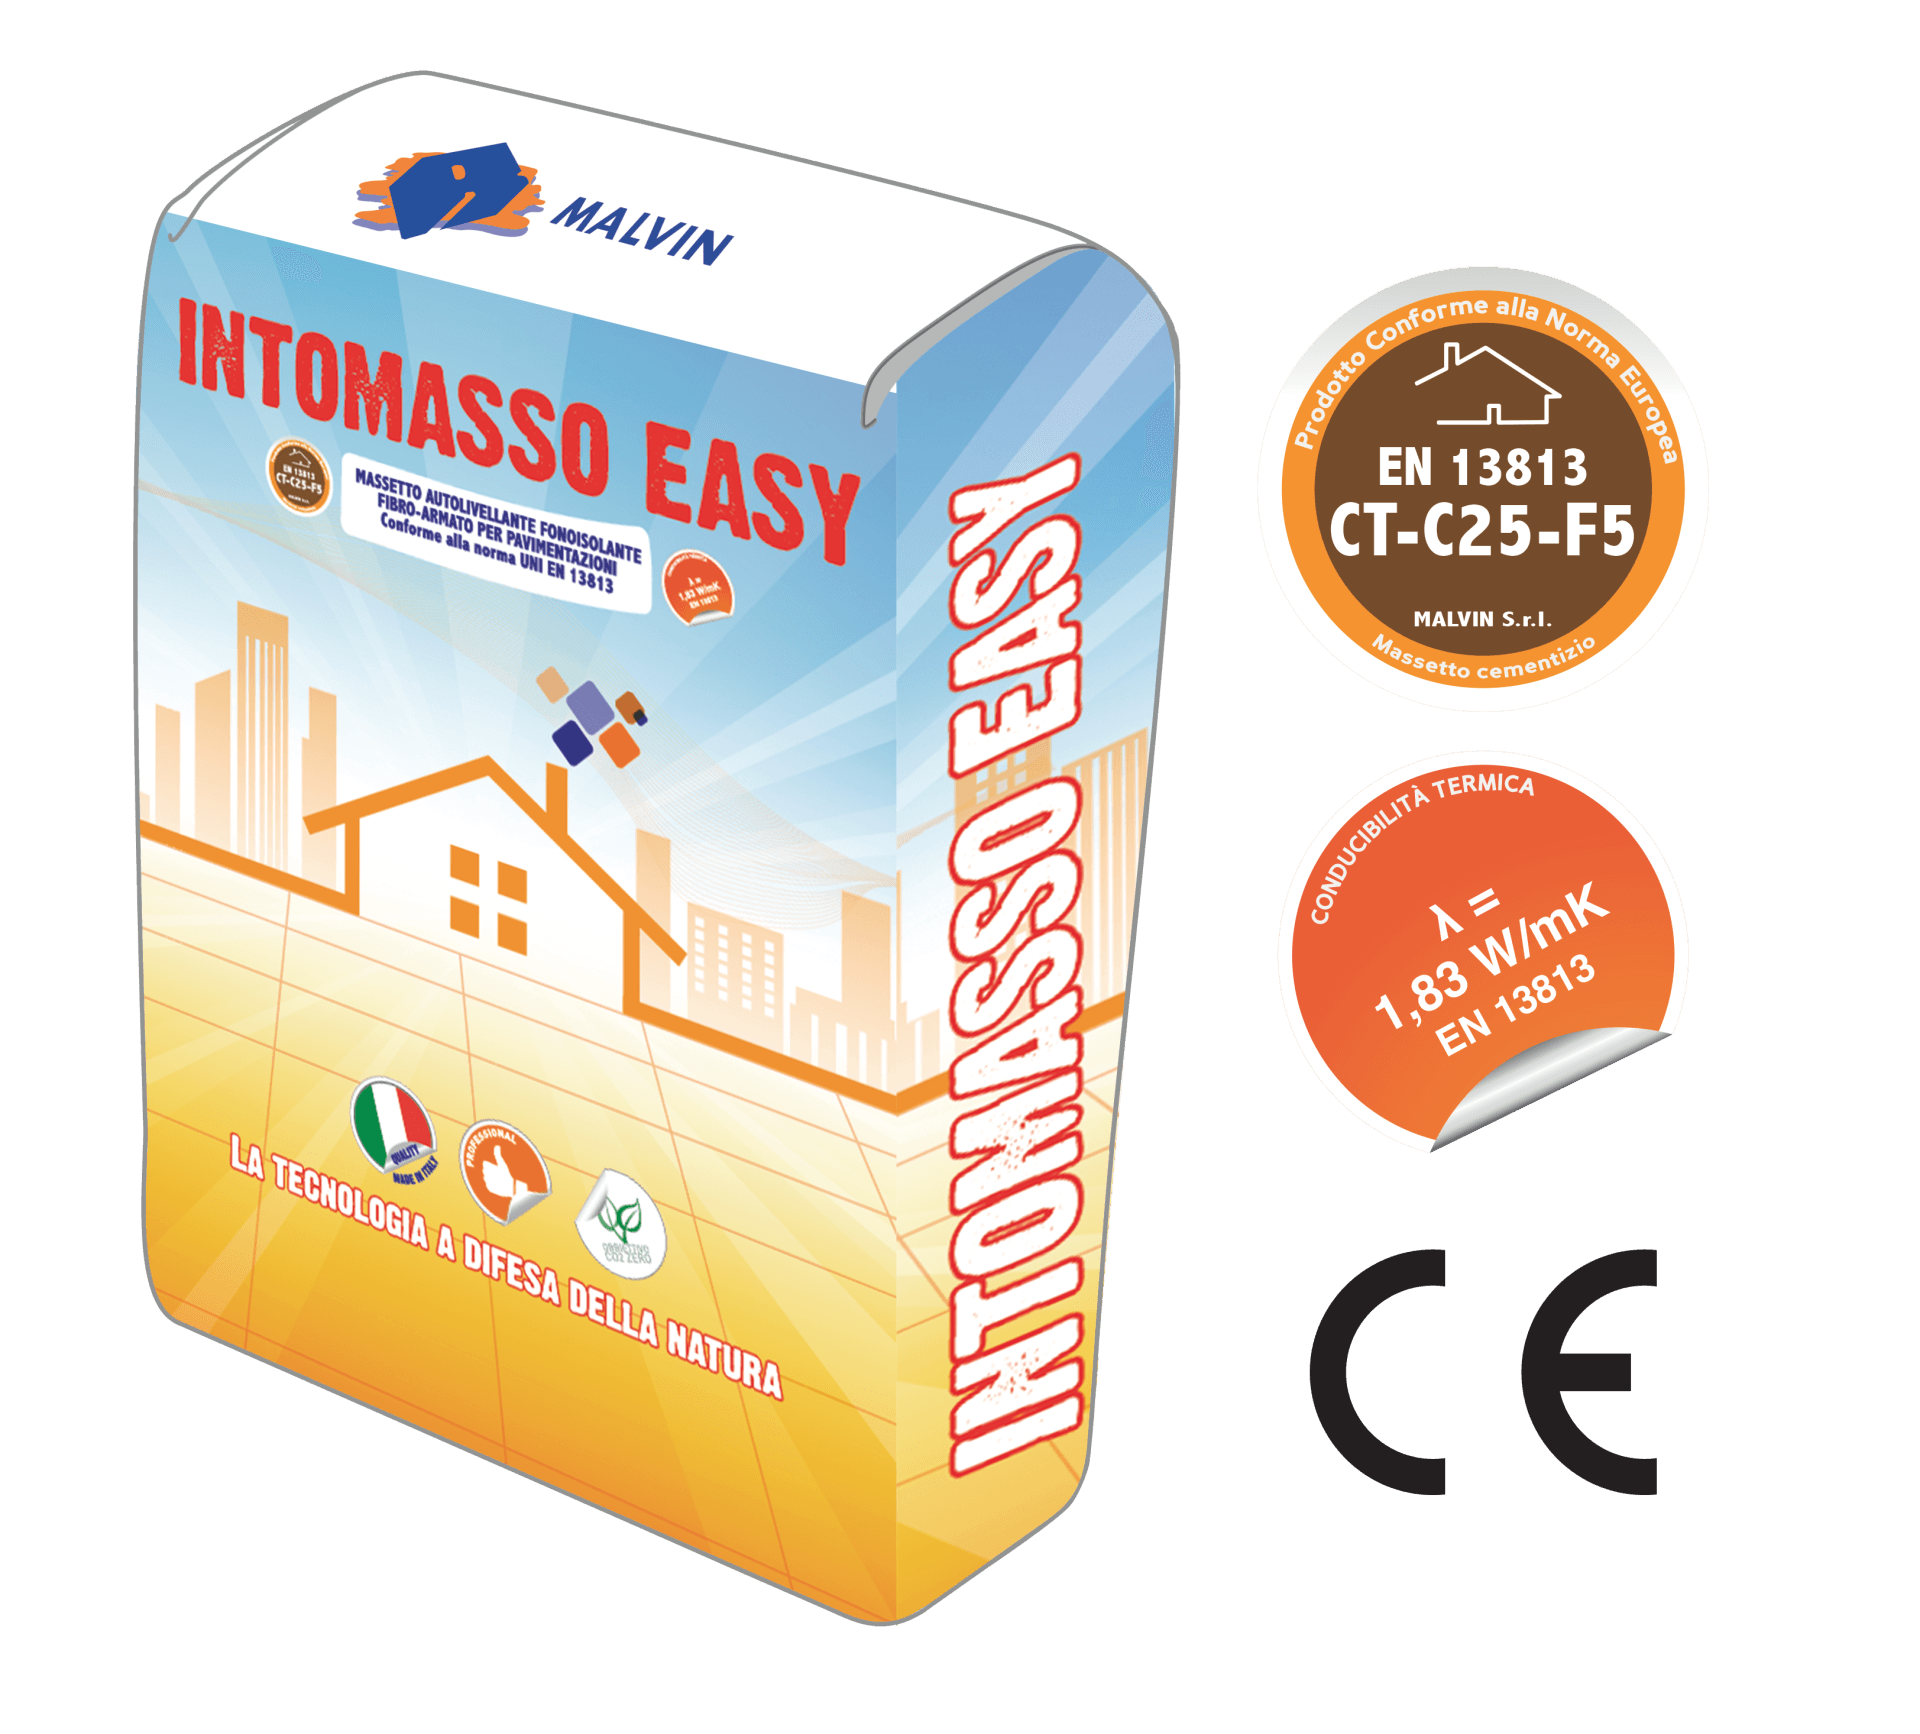 Intomasso EASY